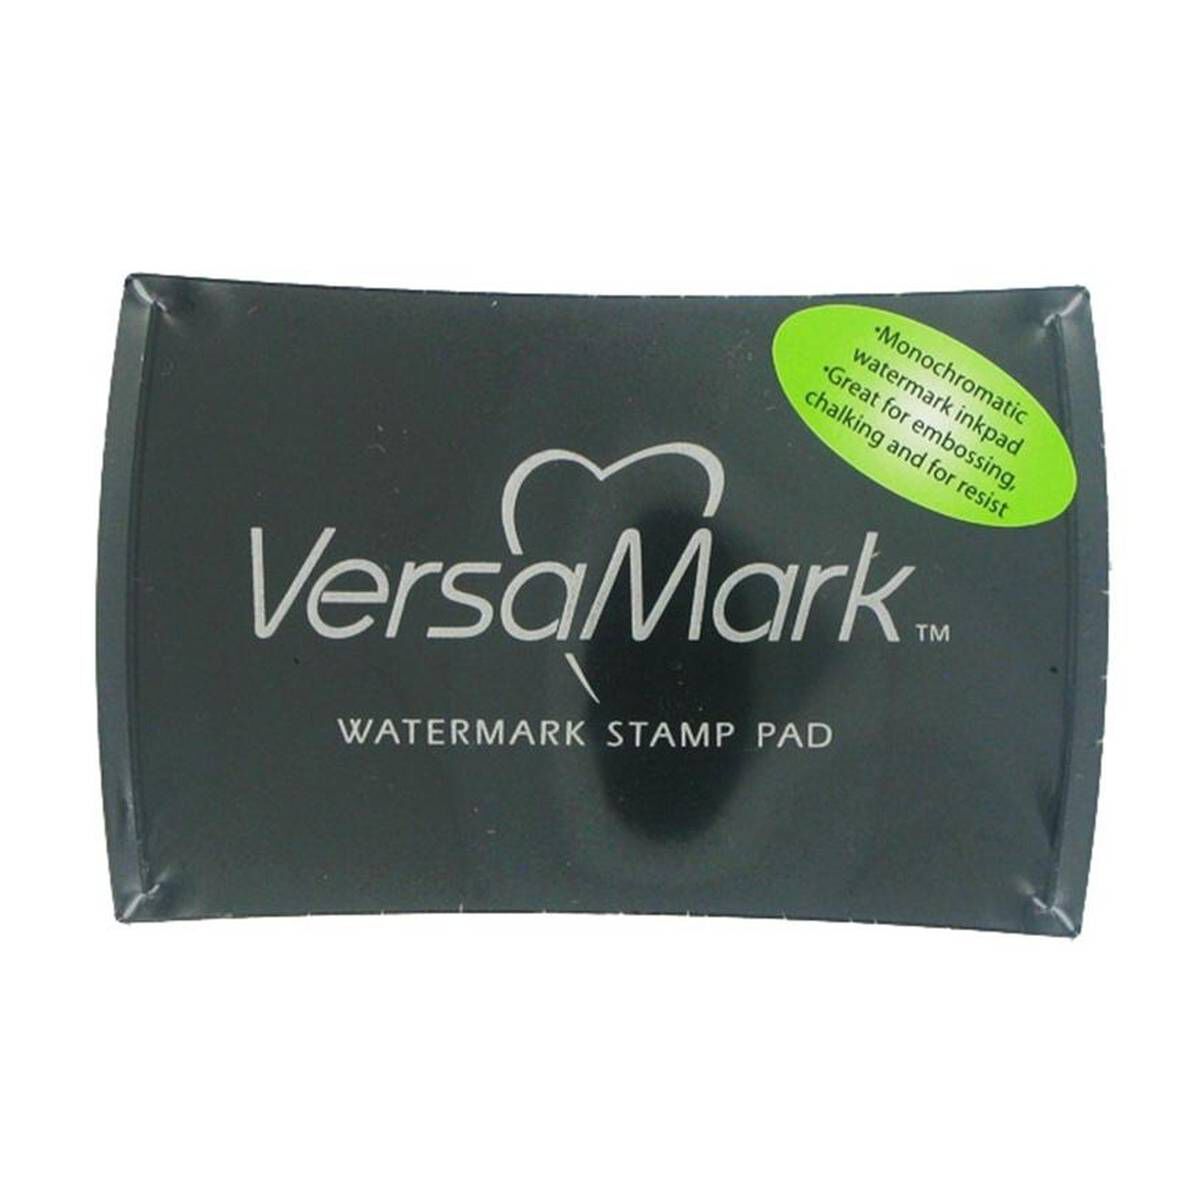 Imagine Crafts Versamark Watermark Mini Stamp Pad